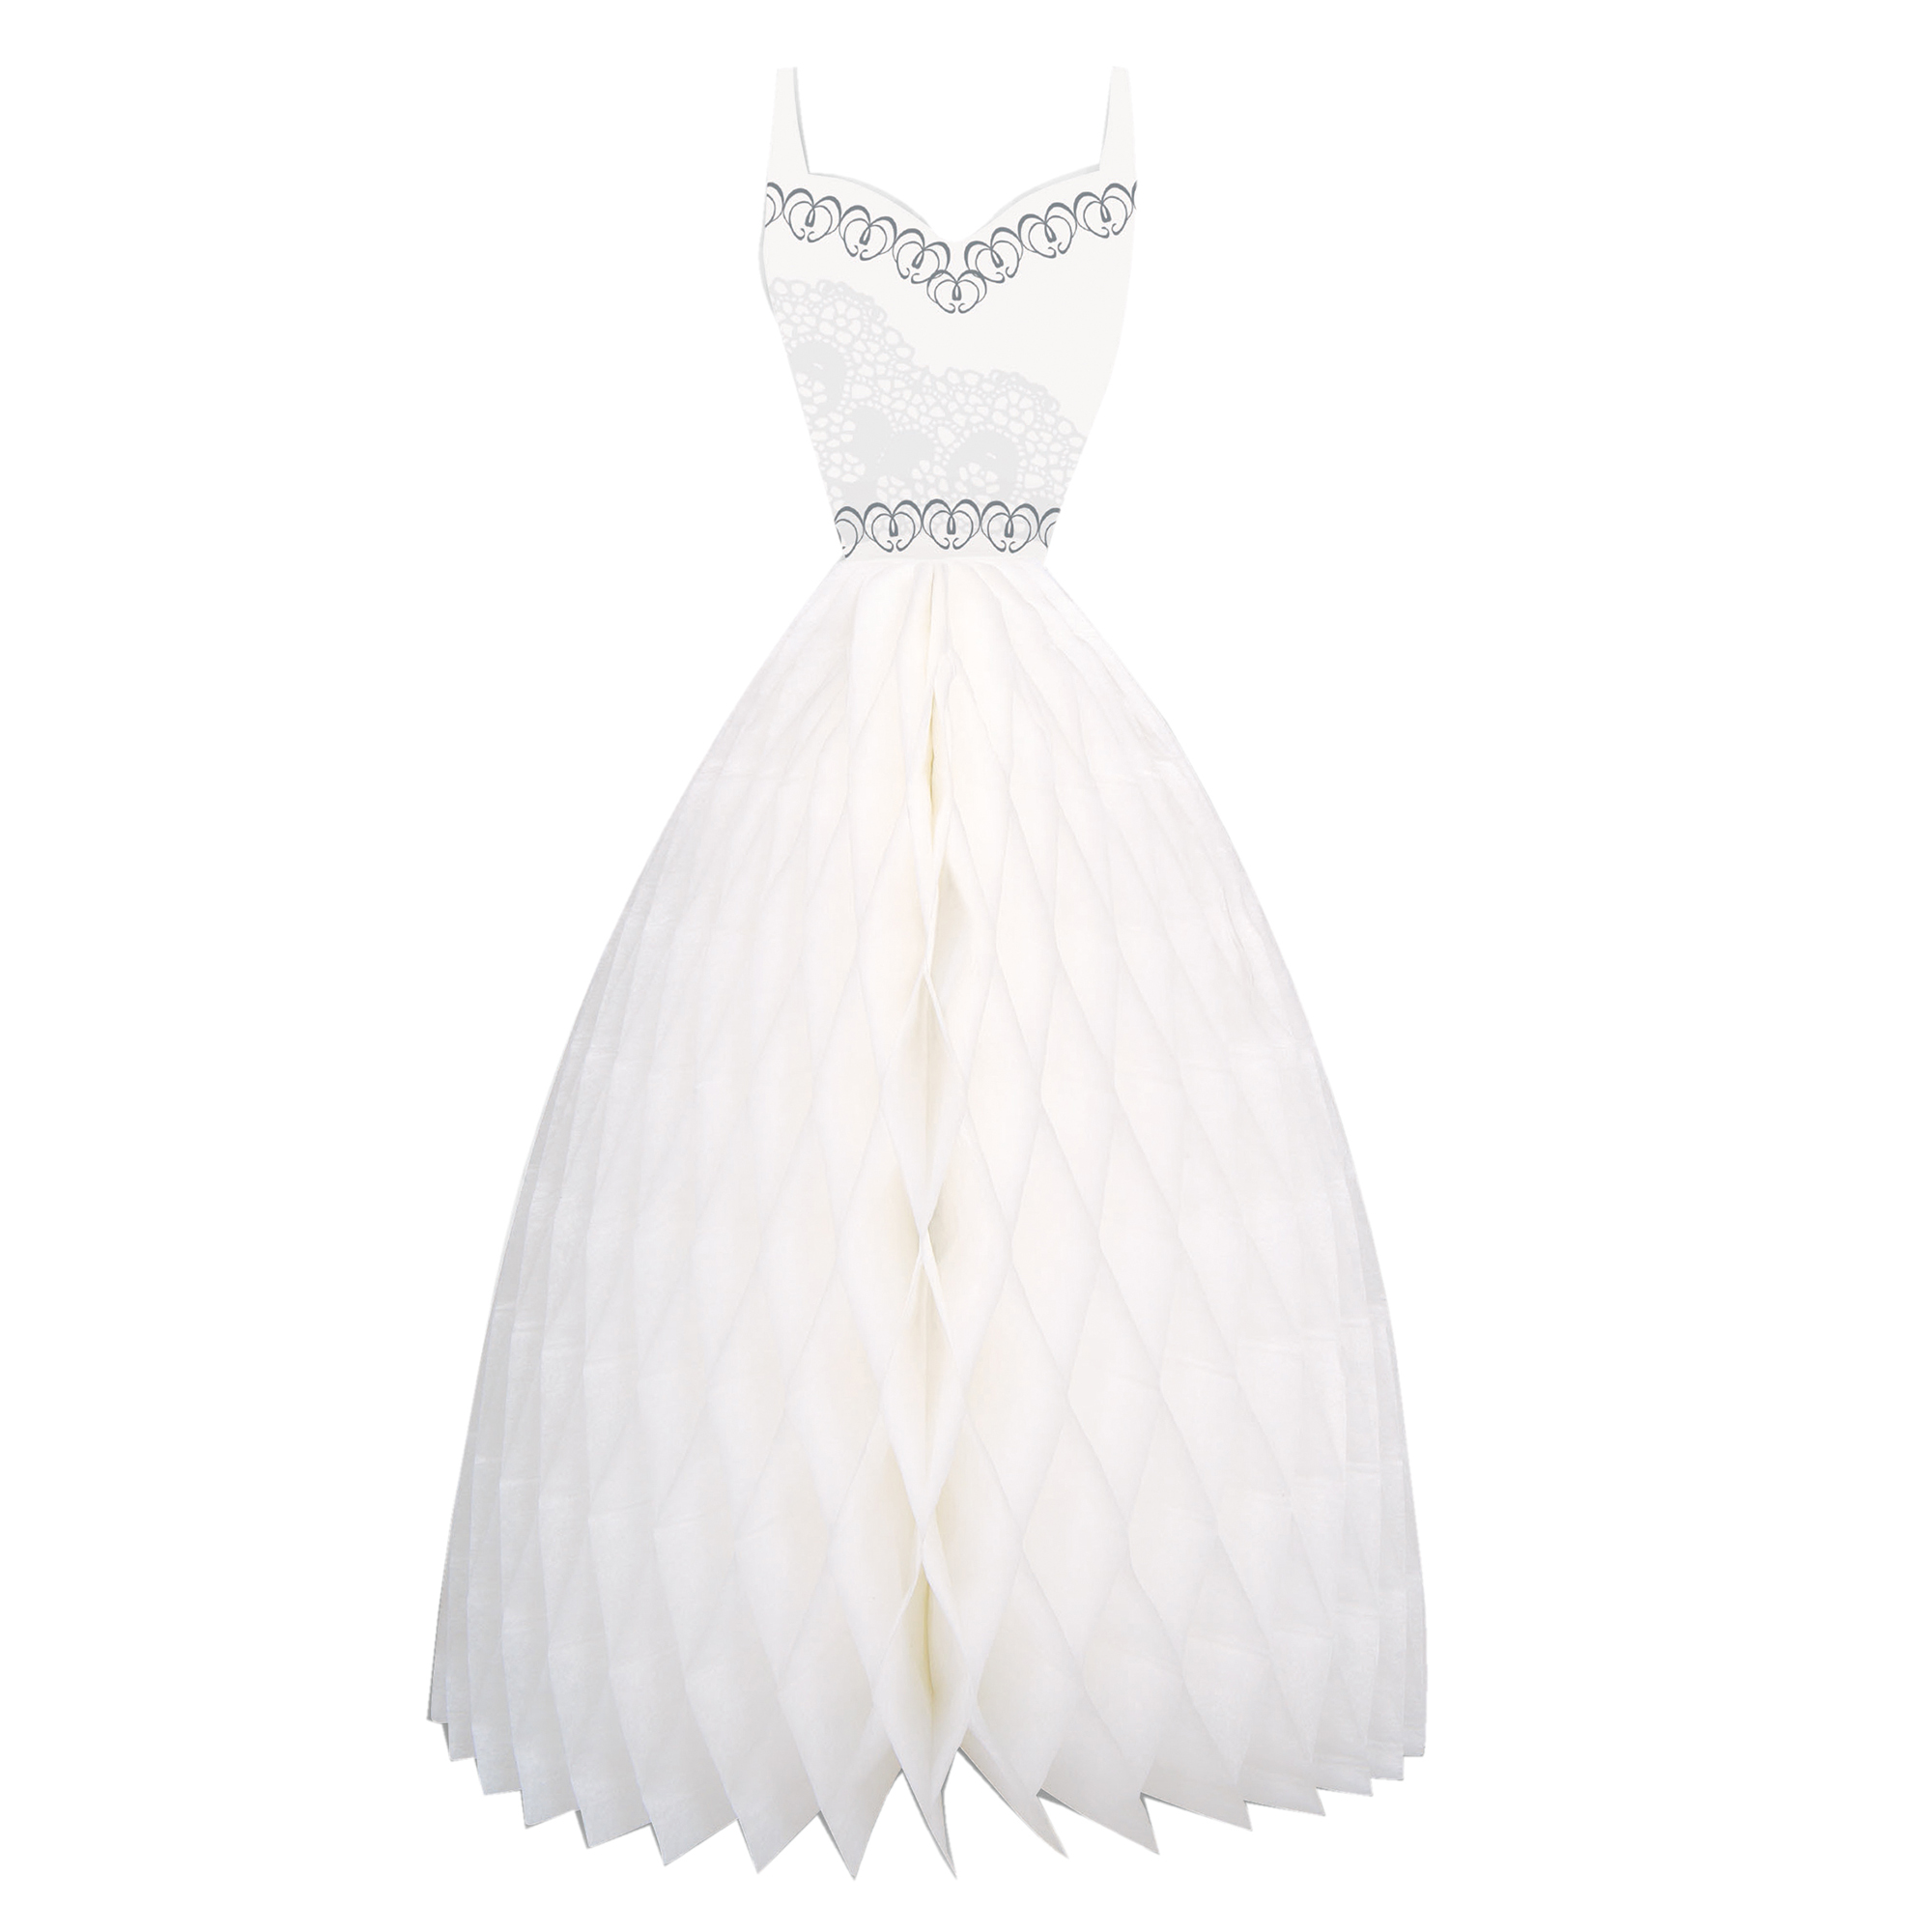 Honeycomb Wedding Dress Table Centrepiece